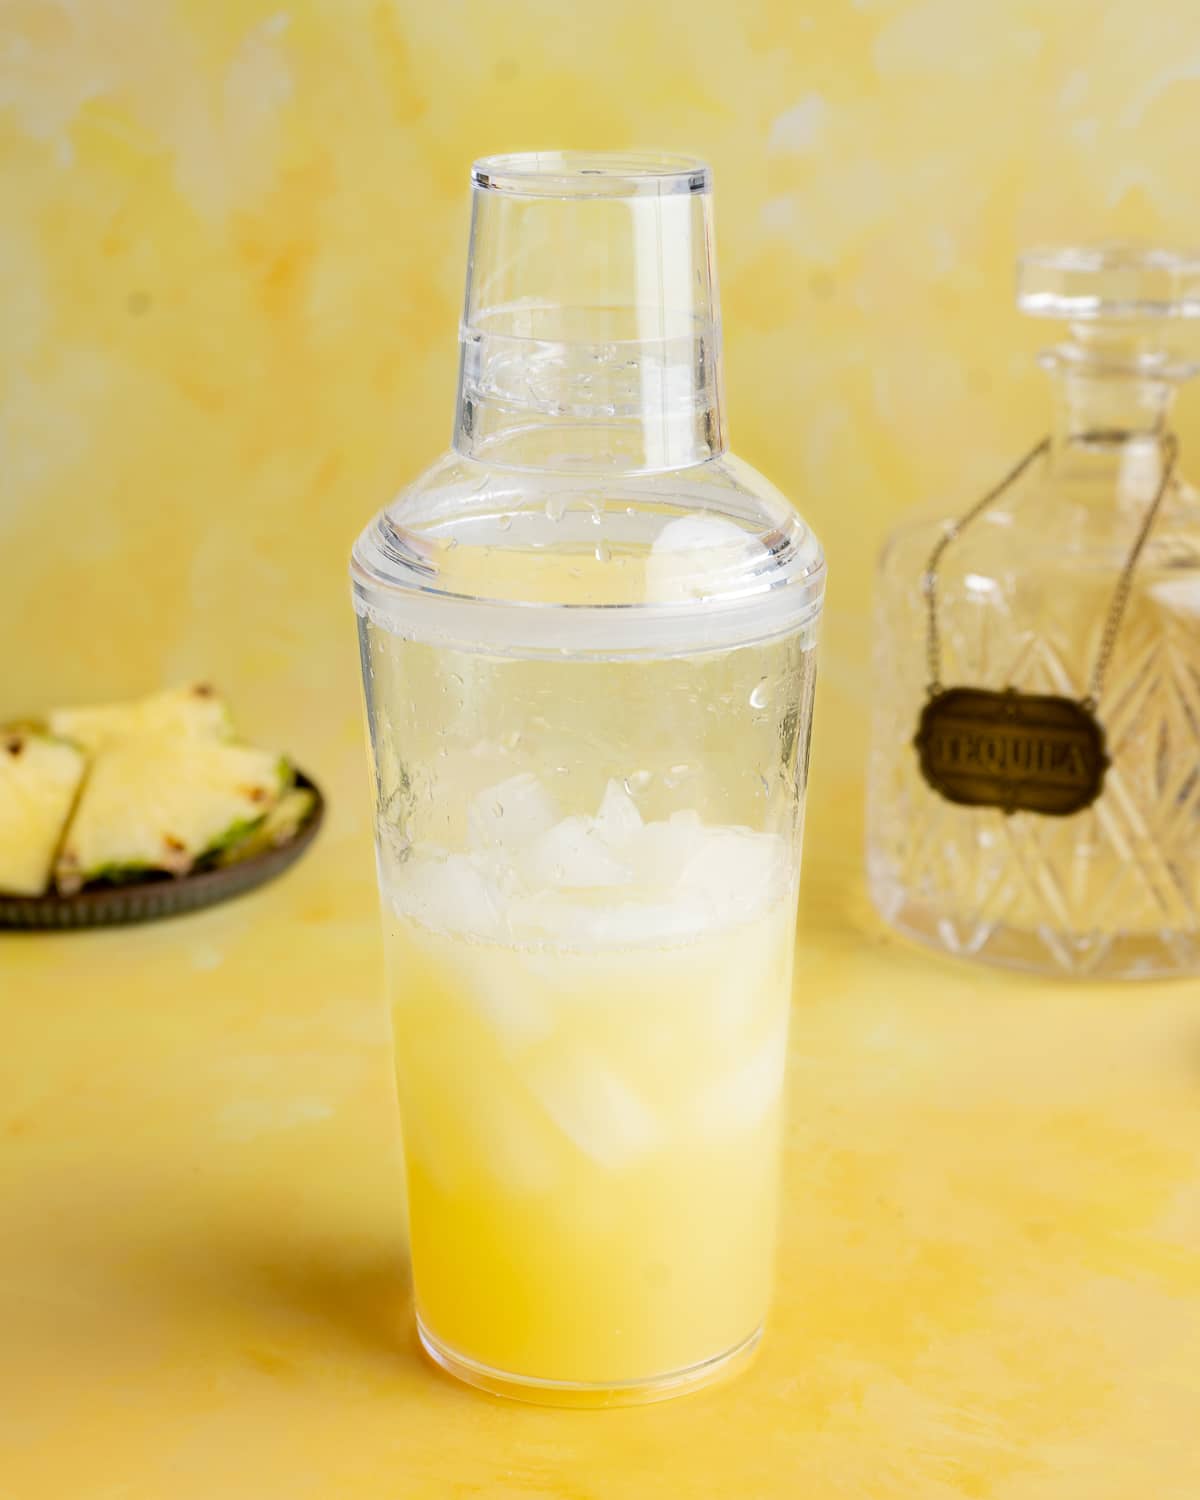 Pineapple margarita ingredients in a cocktail shaker.